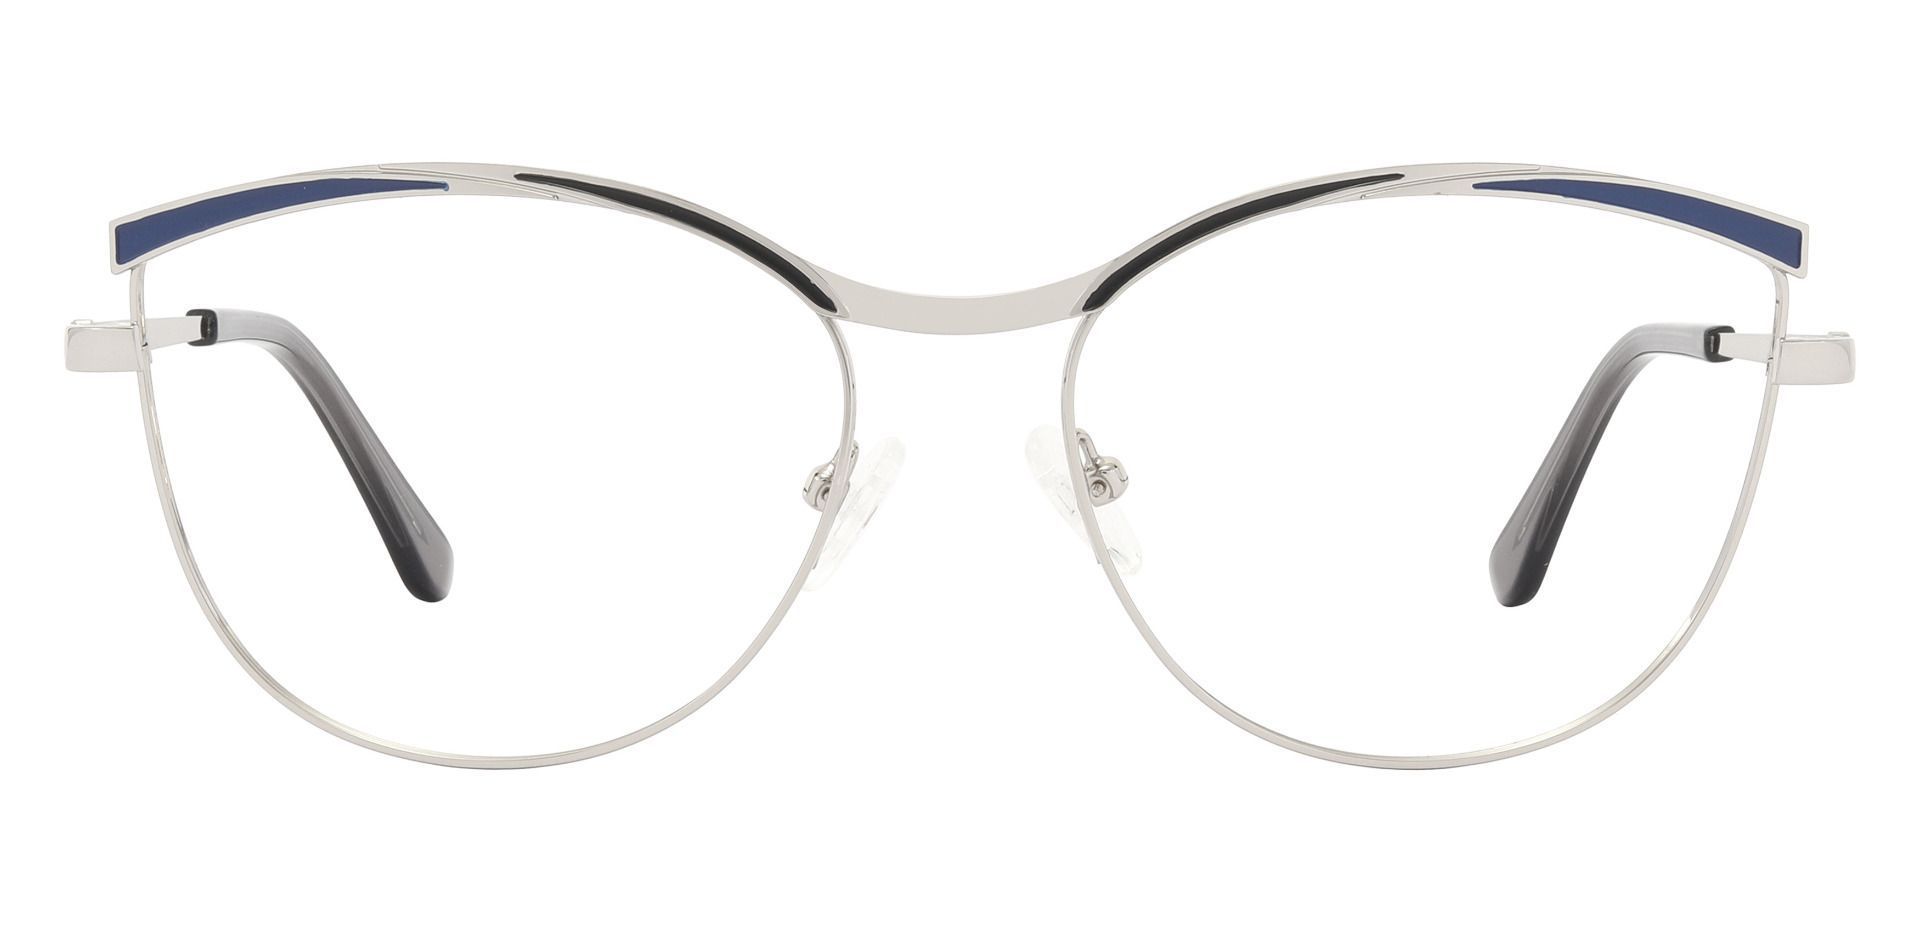 Amarillo Browline Progressive Glasses - Red | Women's Eyeglasses ...